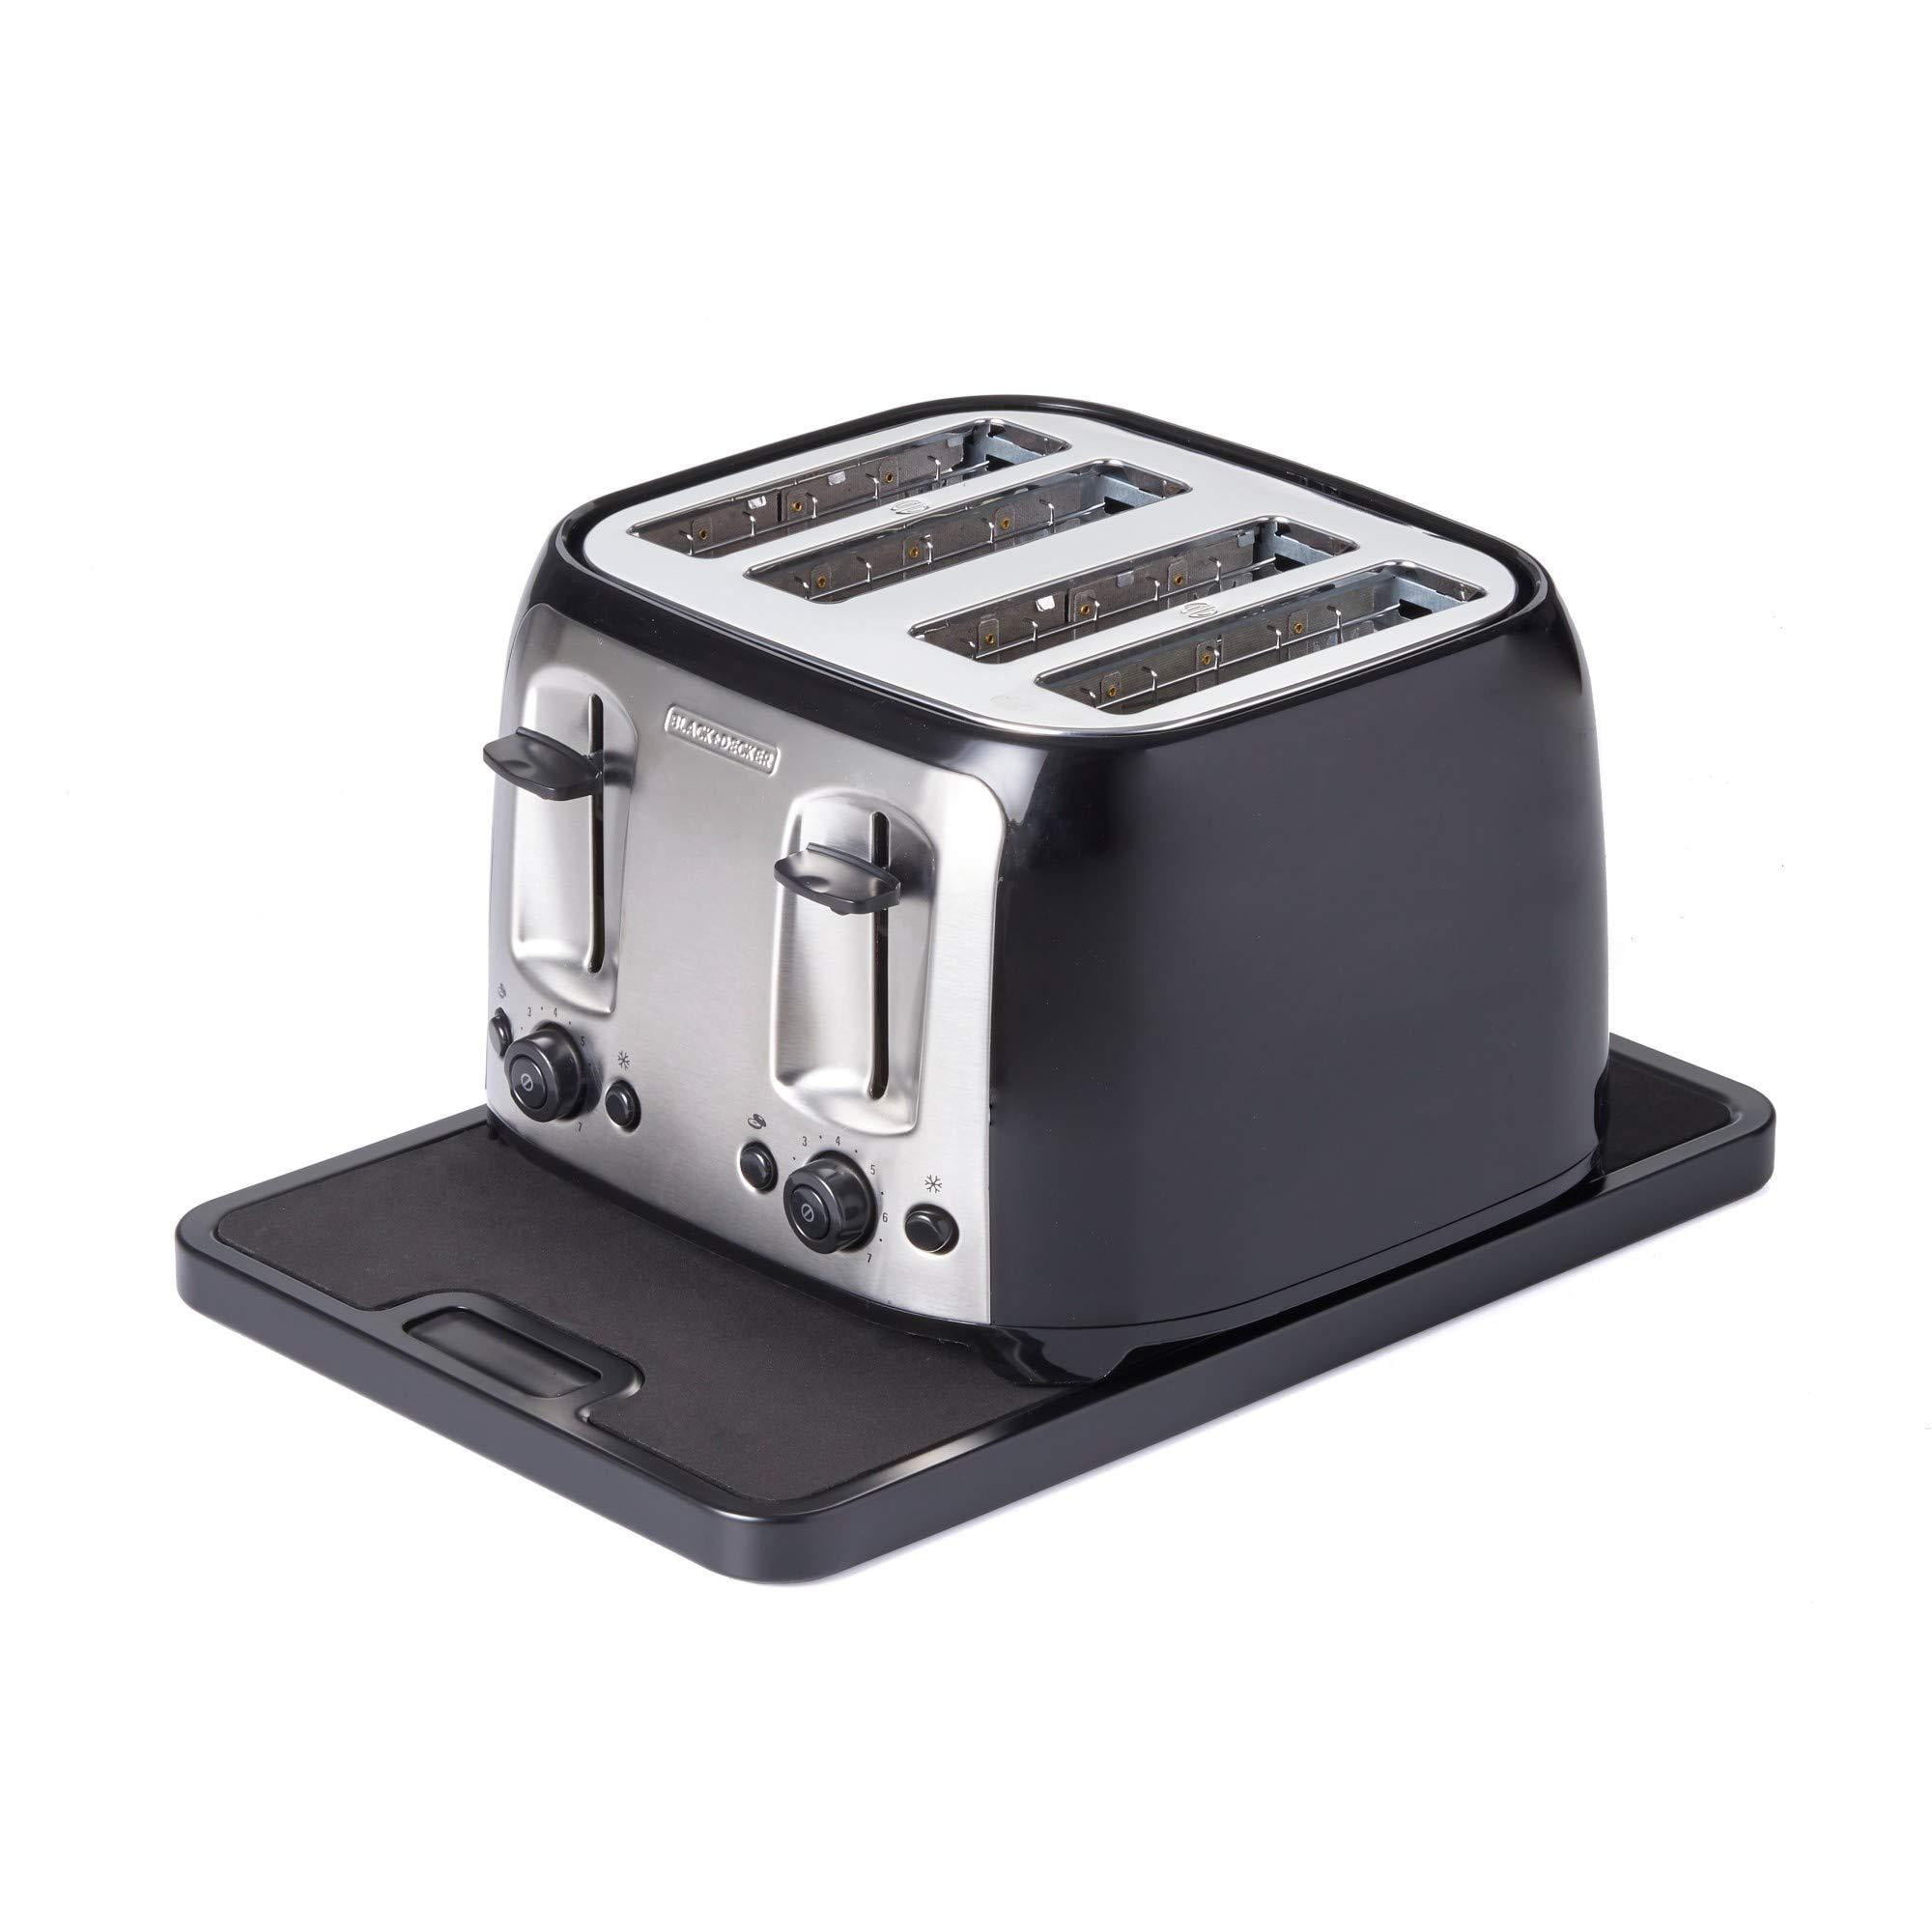 Nifty Appliance Rolling Tray - Black – Kooi Housewares